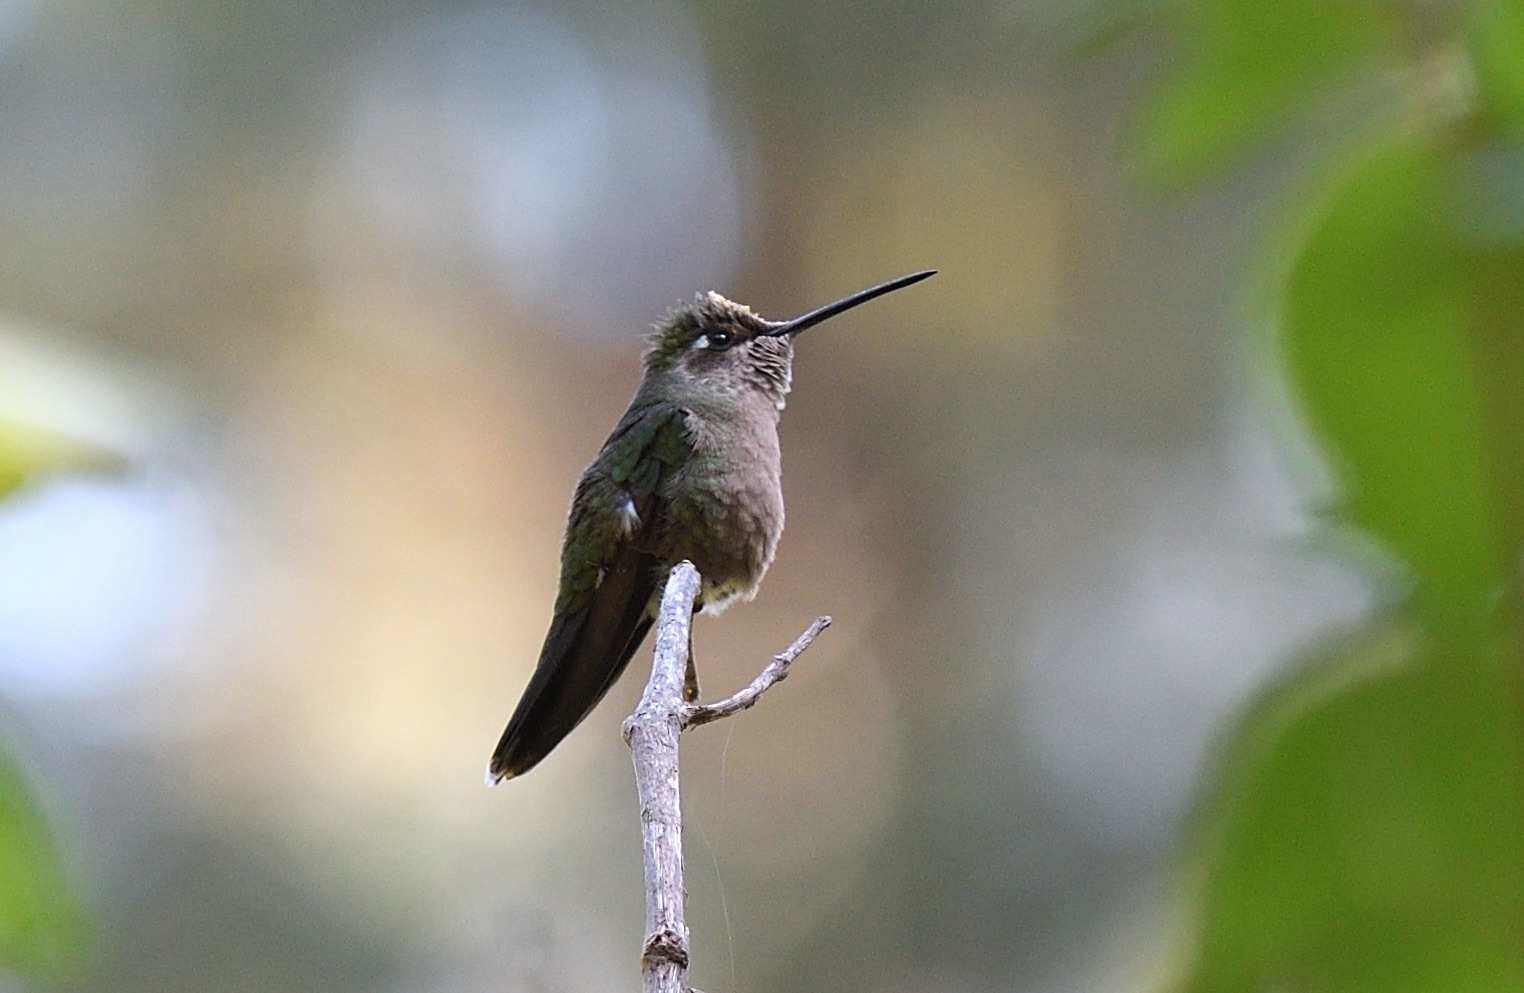 rivoli's hummingbird